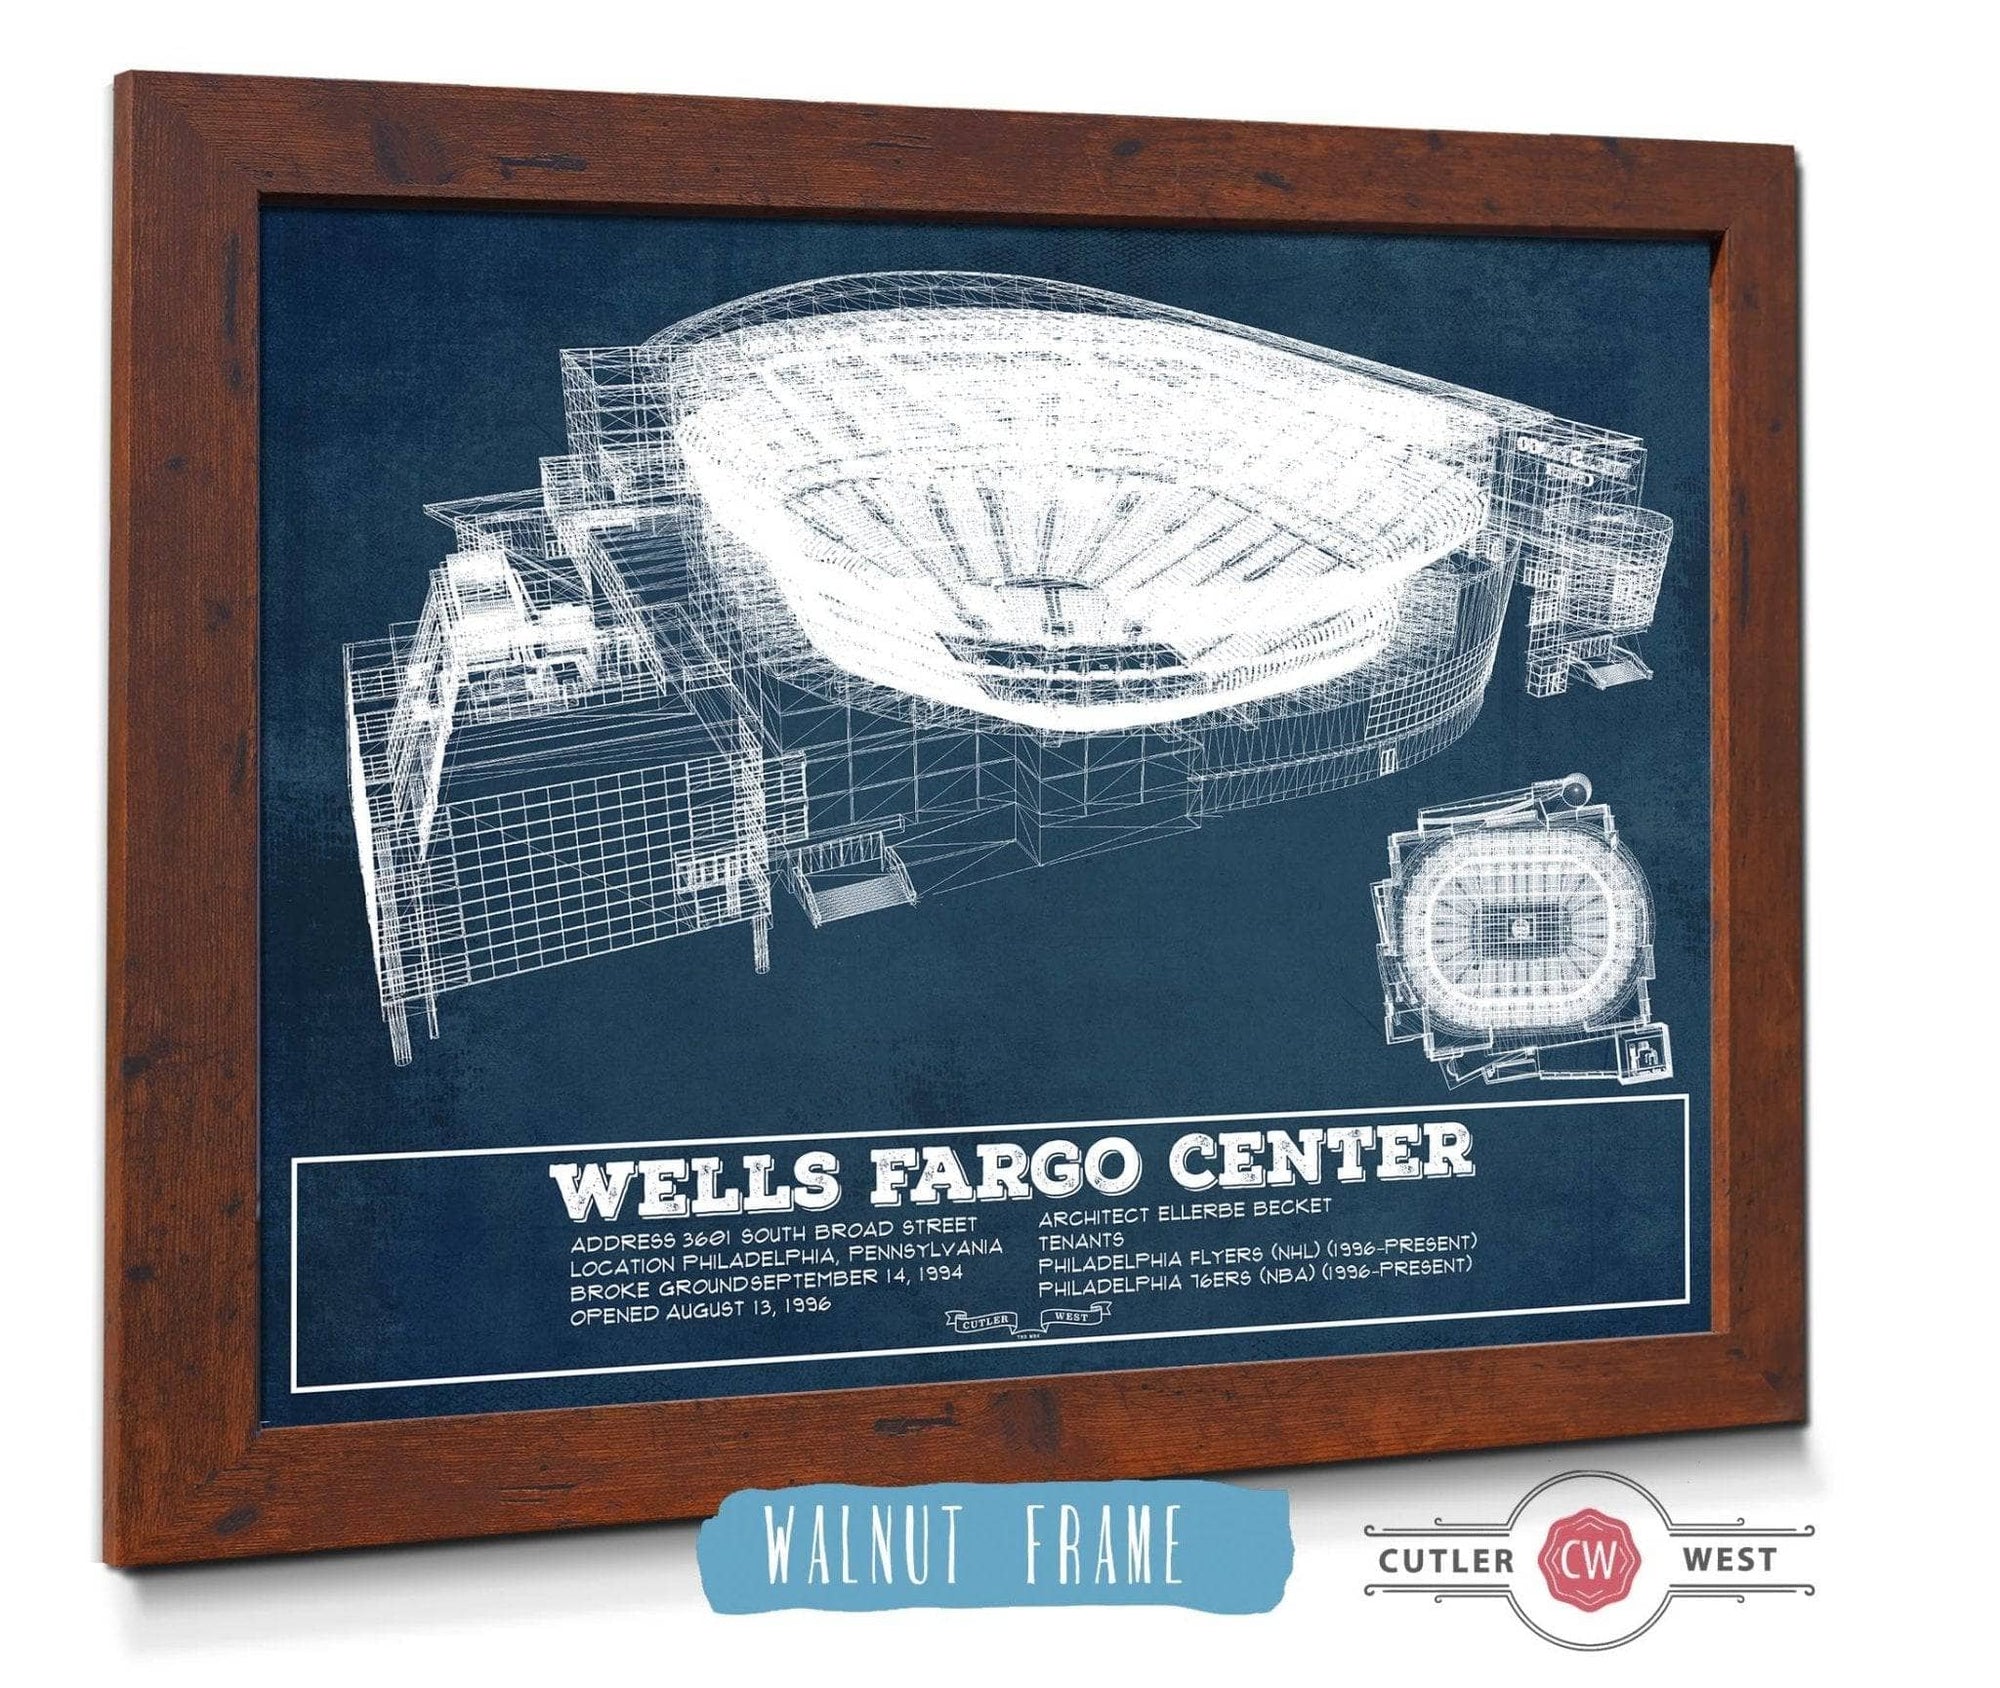 Cutler West Philadelphia Flyers Wells Fargo Center Philadelphia Seating Chart - Vintage Hockey Print